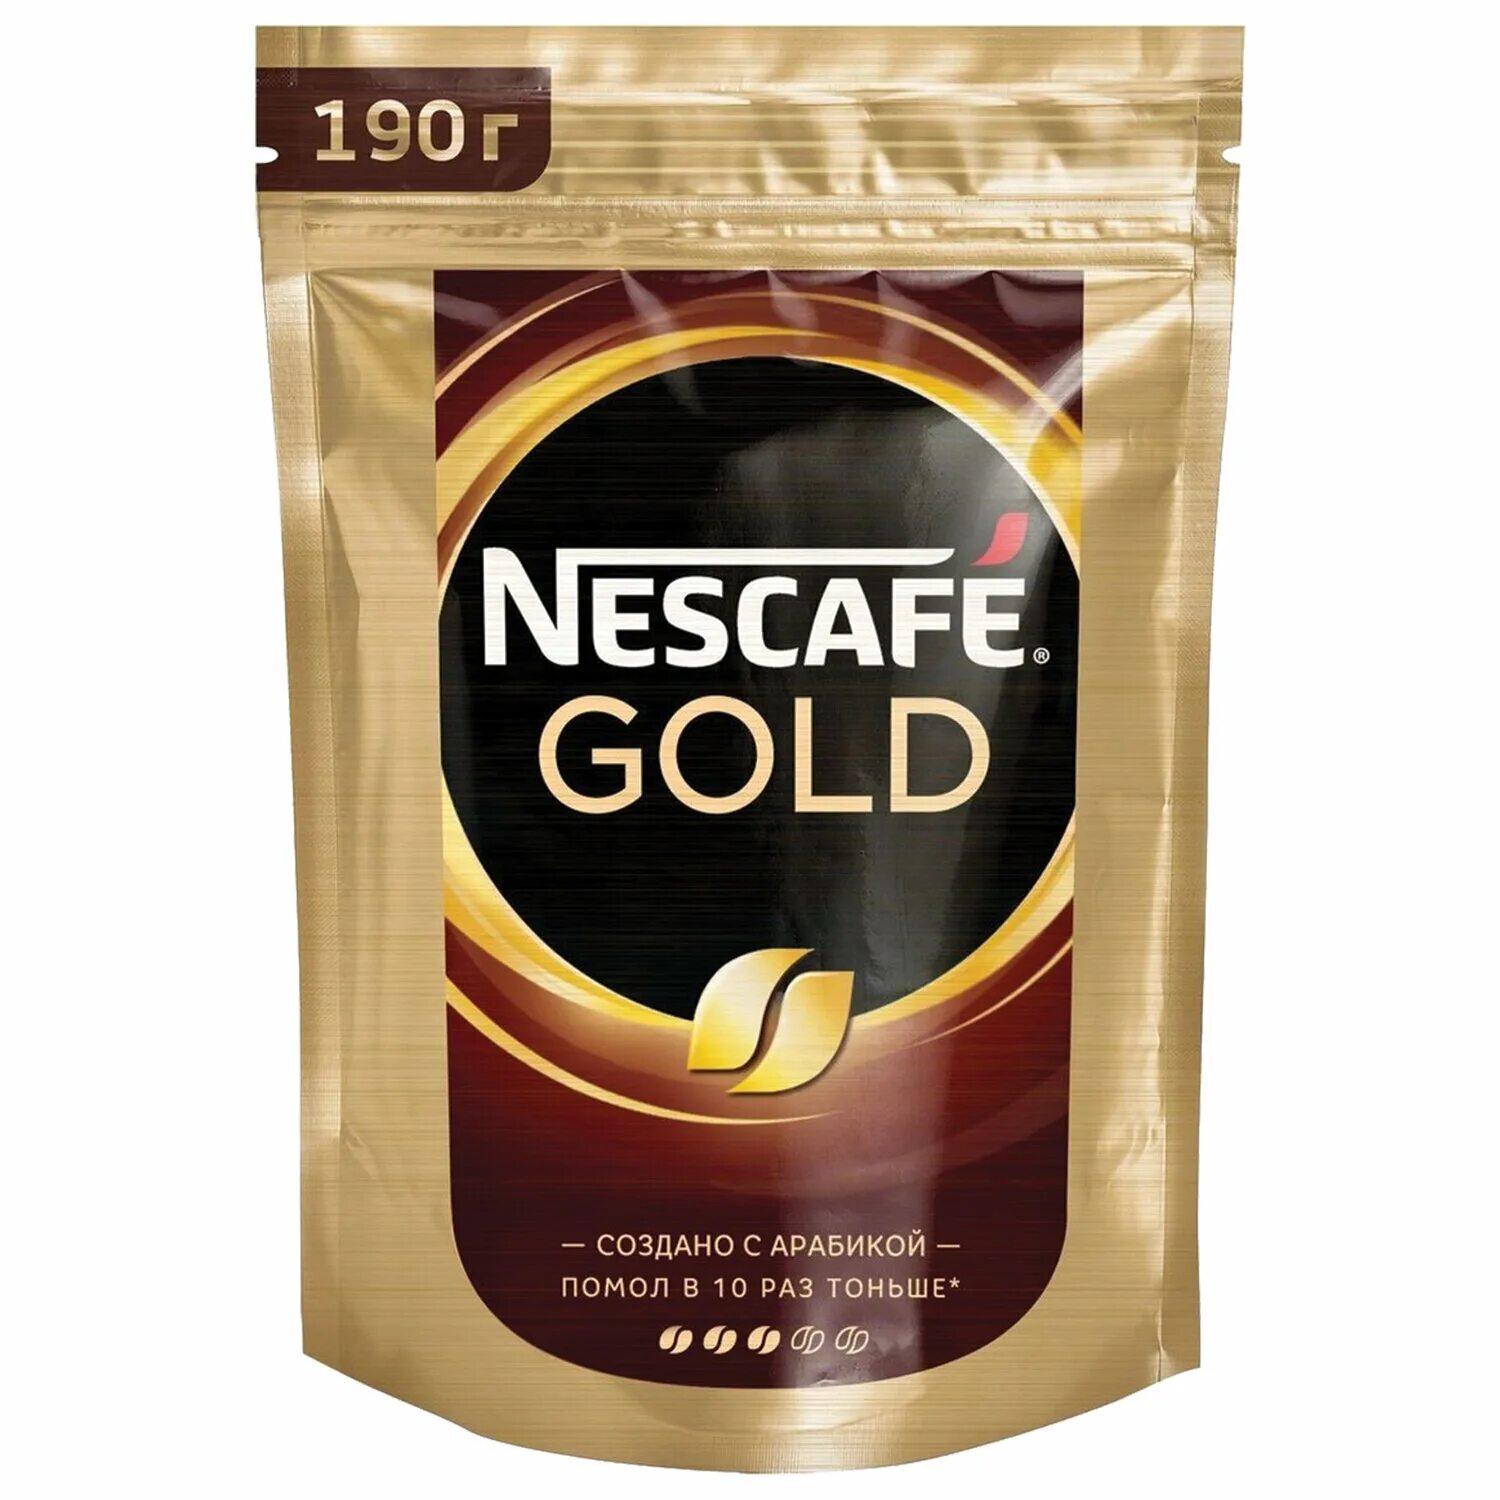 Nescafe gold пакет. Кофе Нескафе Голд 190. Нескафе Голд 250 гр. Nescafe Gold 220 г. Кофе Нескафе Голд 500 гр.